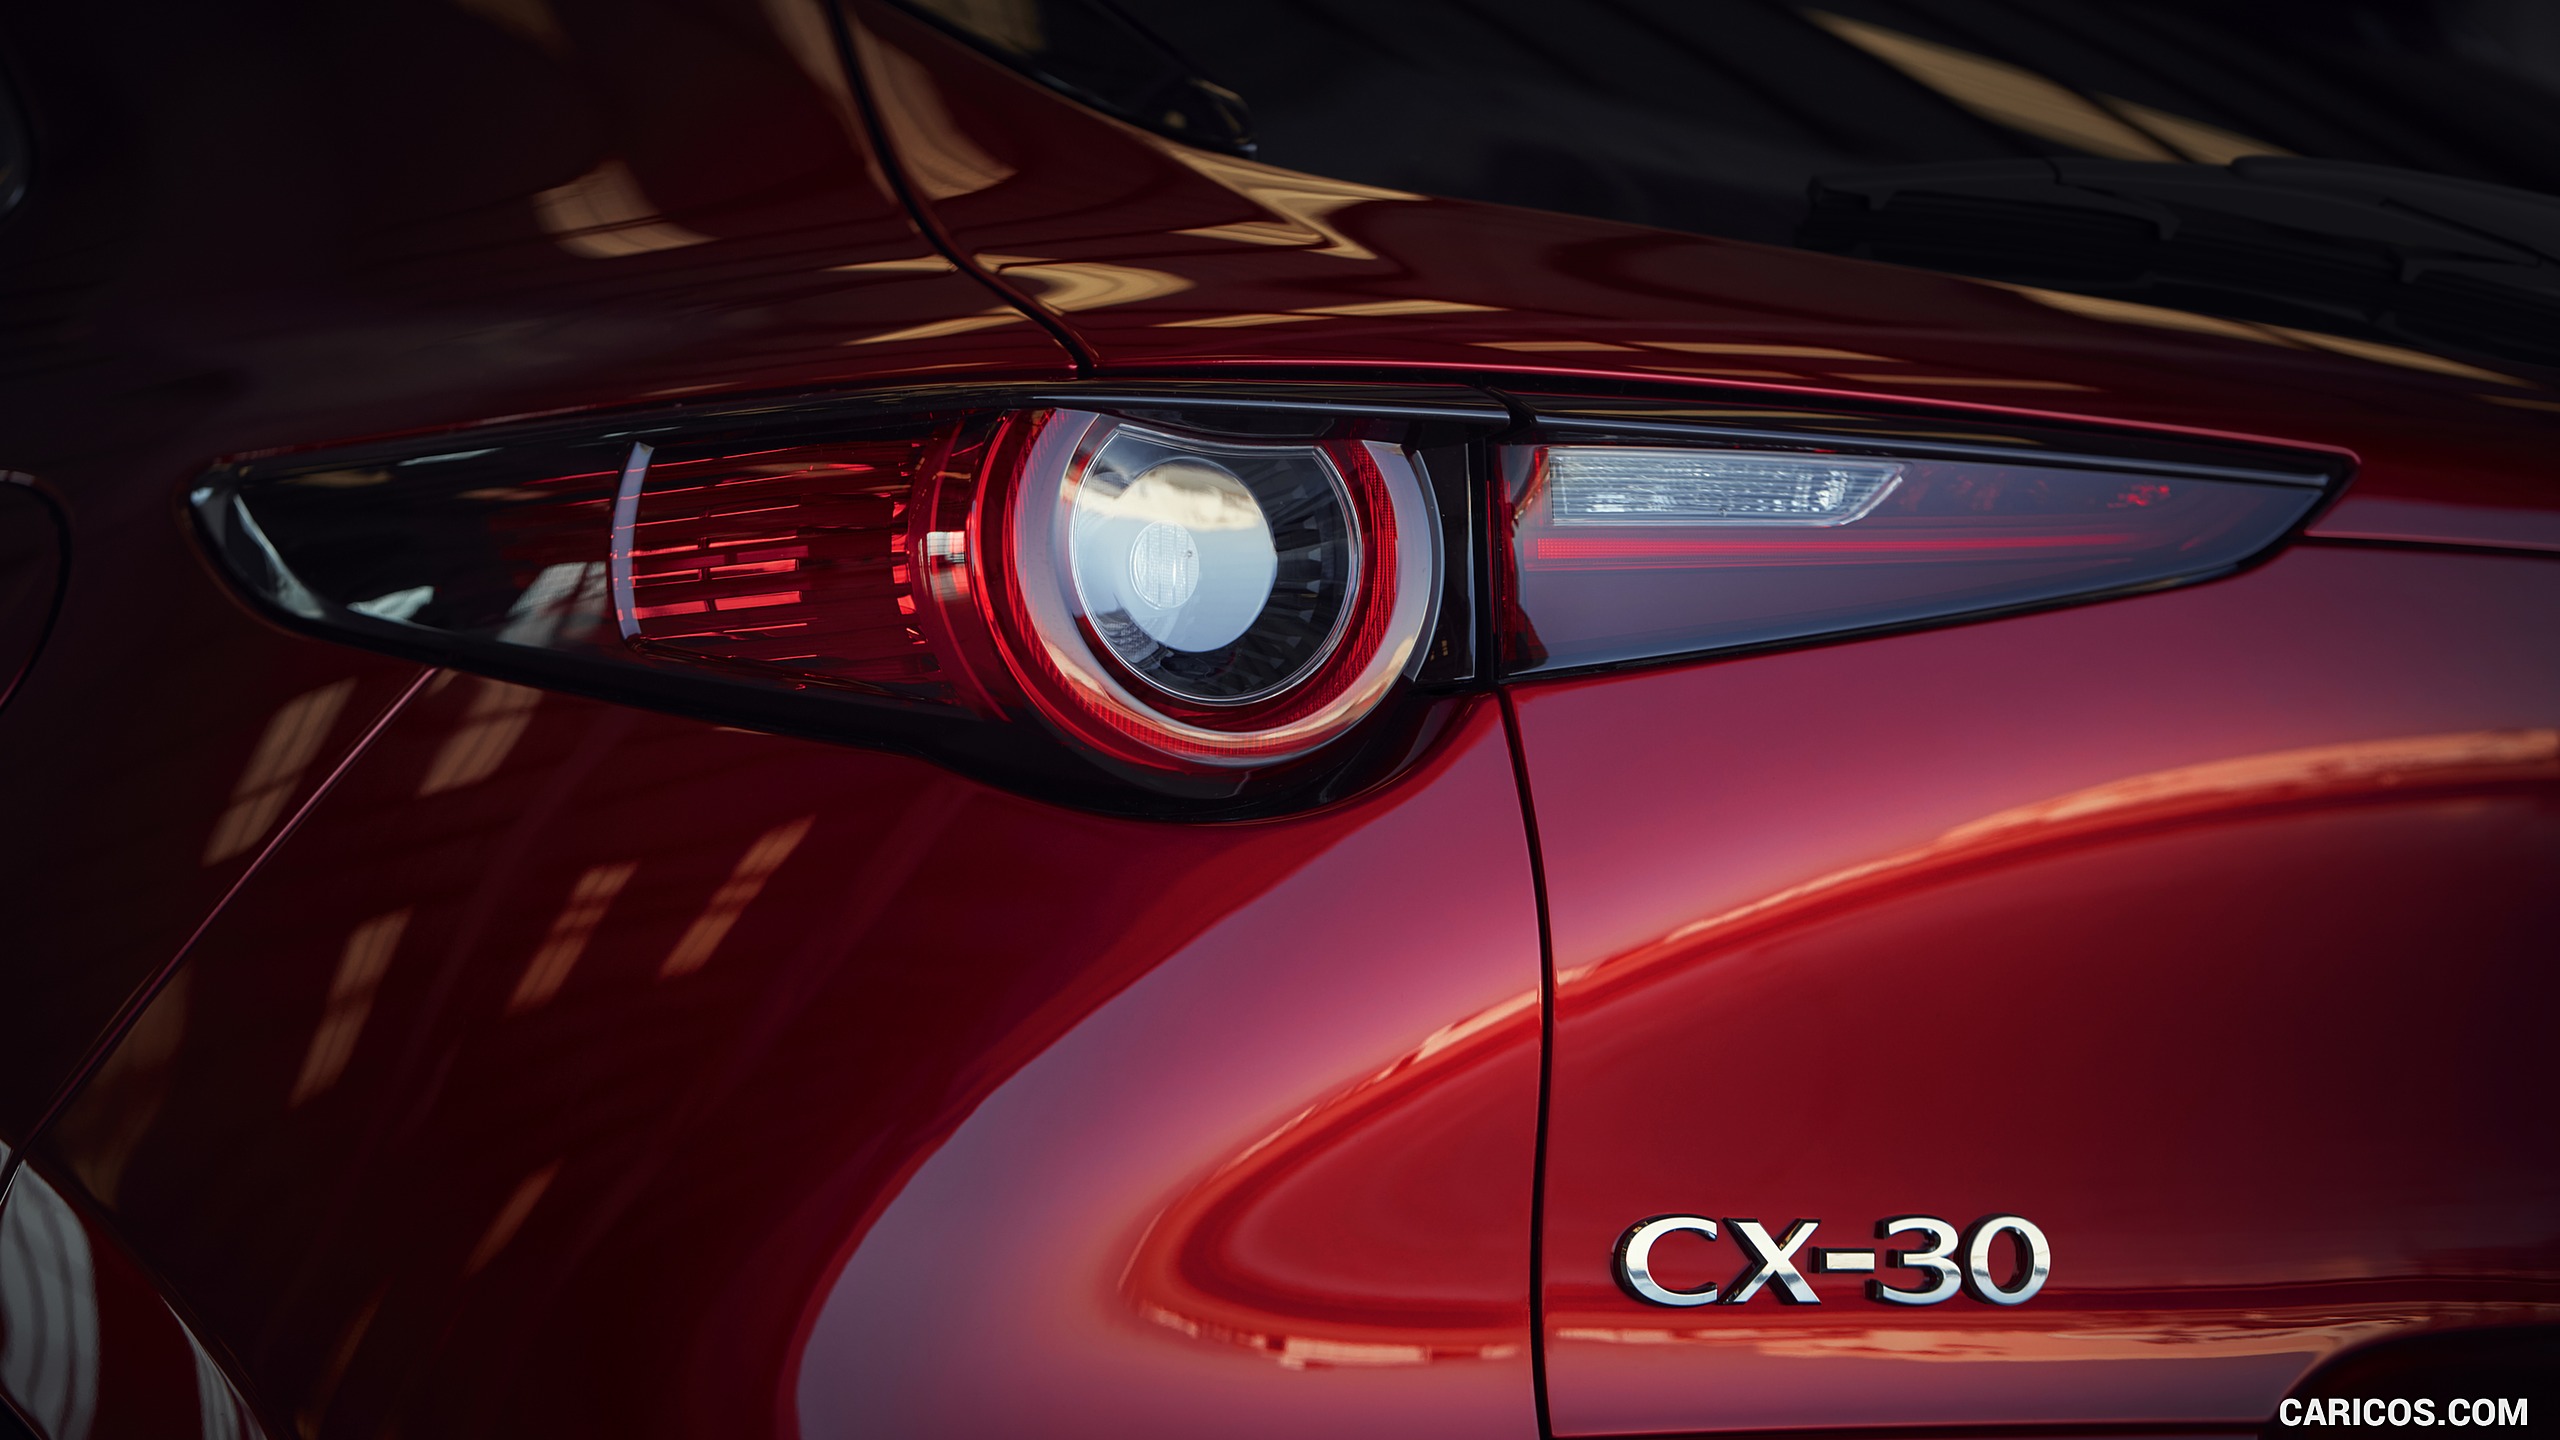 2020 Mazda CX-30 - Tail Light, #15 of 226